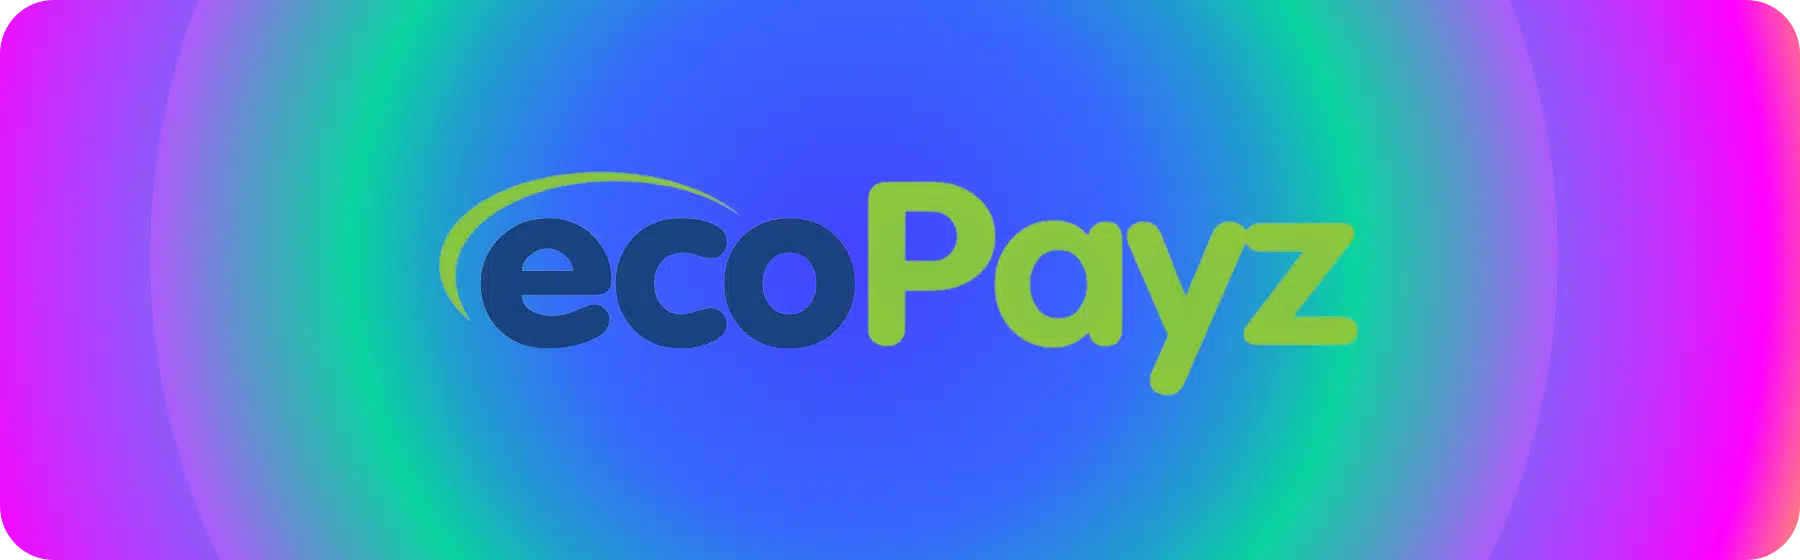 logo for ecopayz payment method